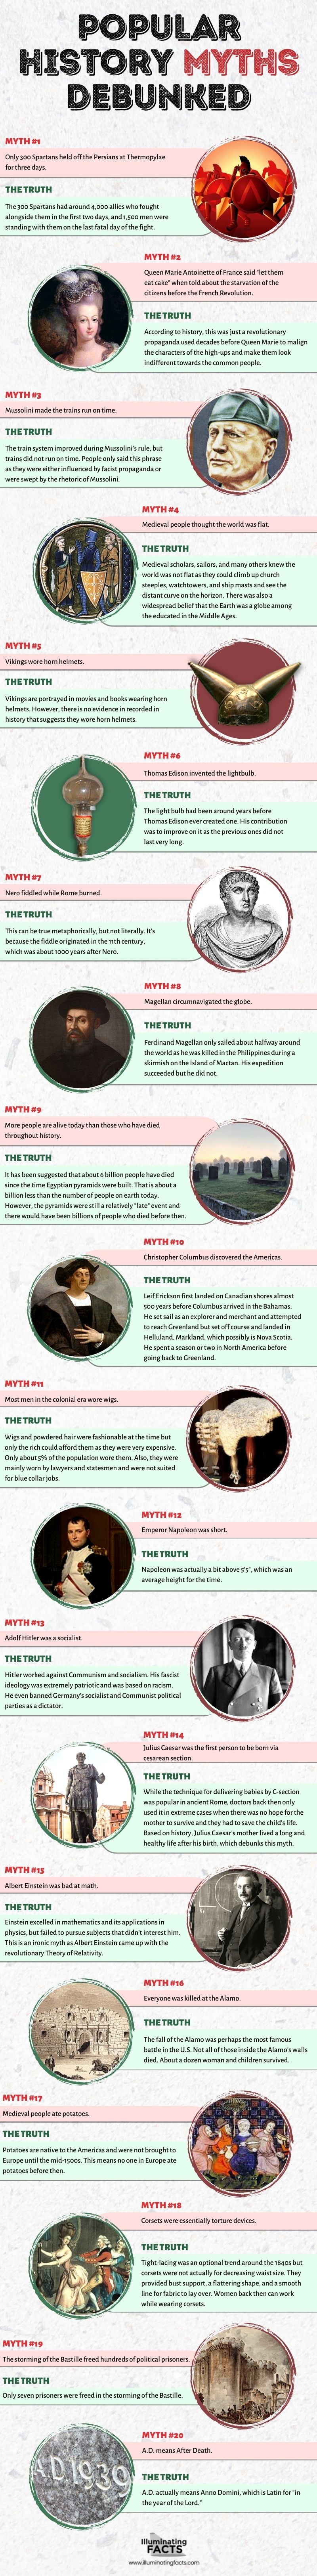 POPULAR HISTORY MYTHS DEBUNKED